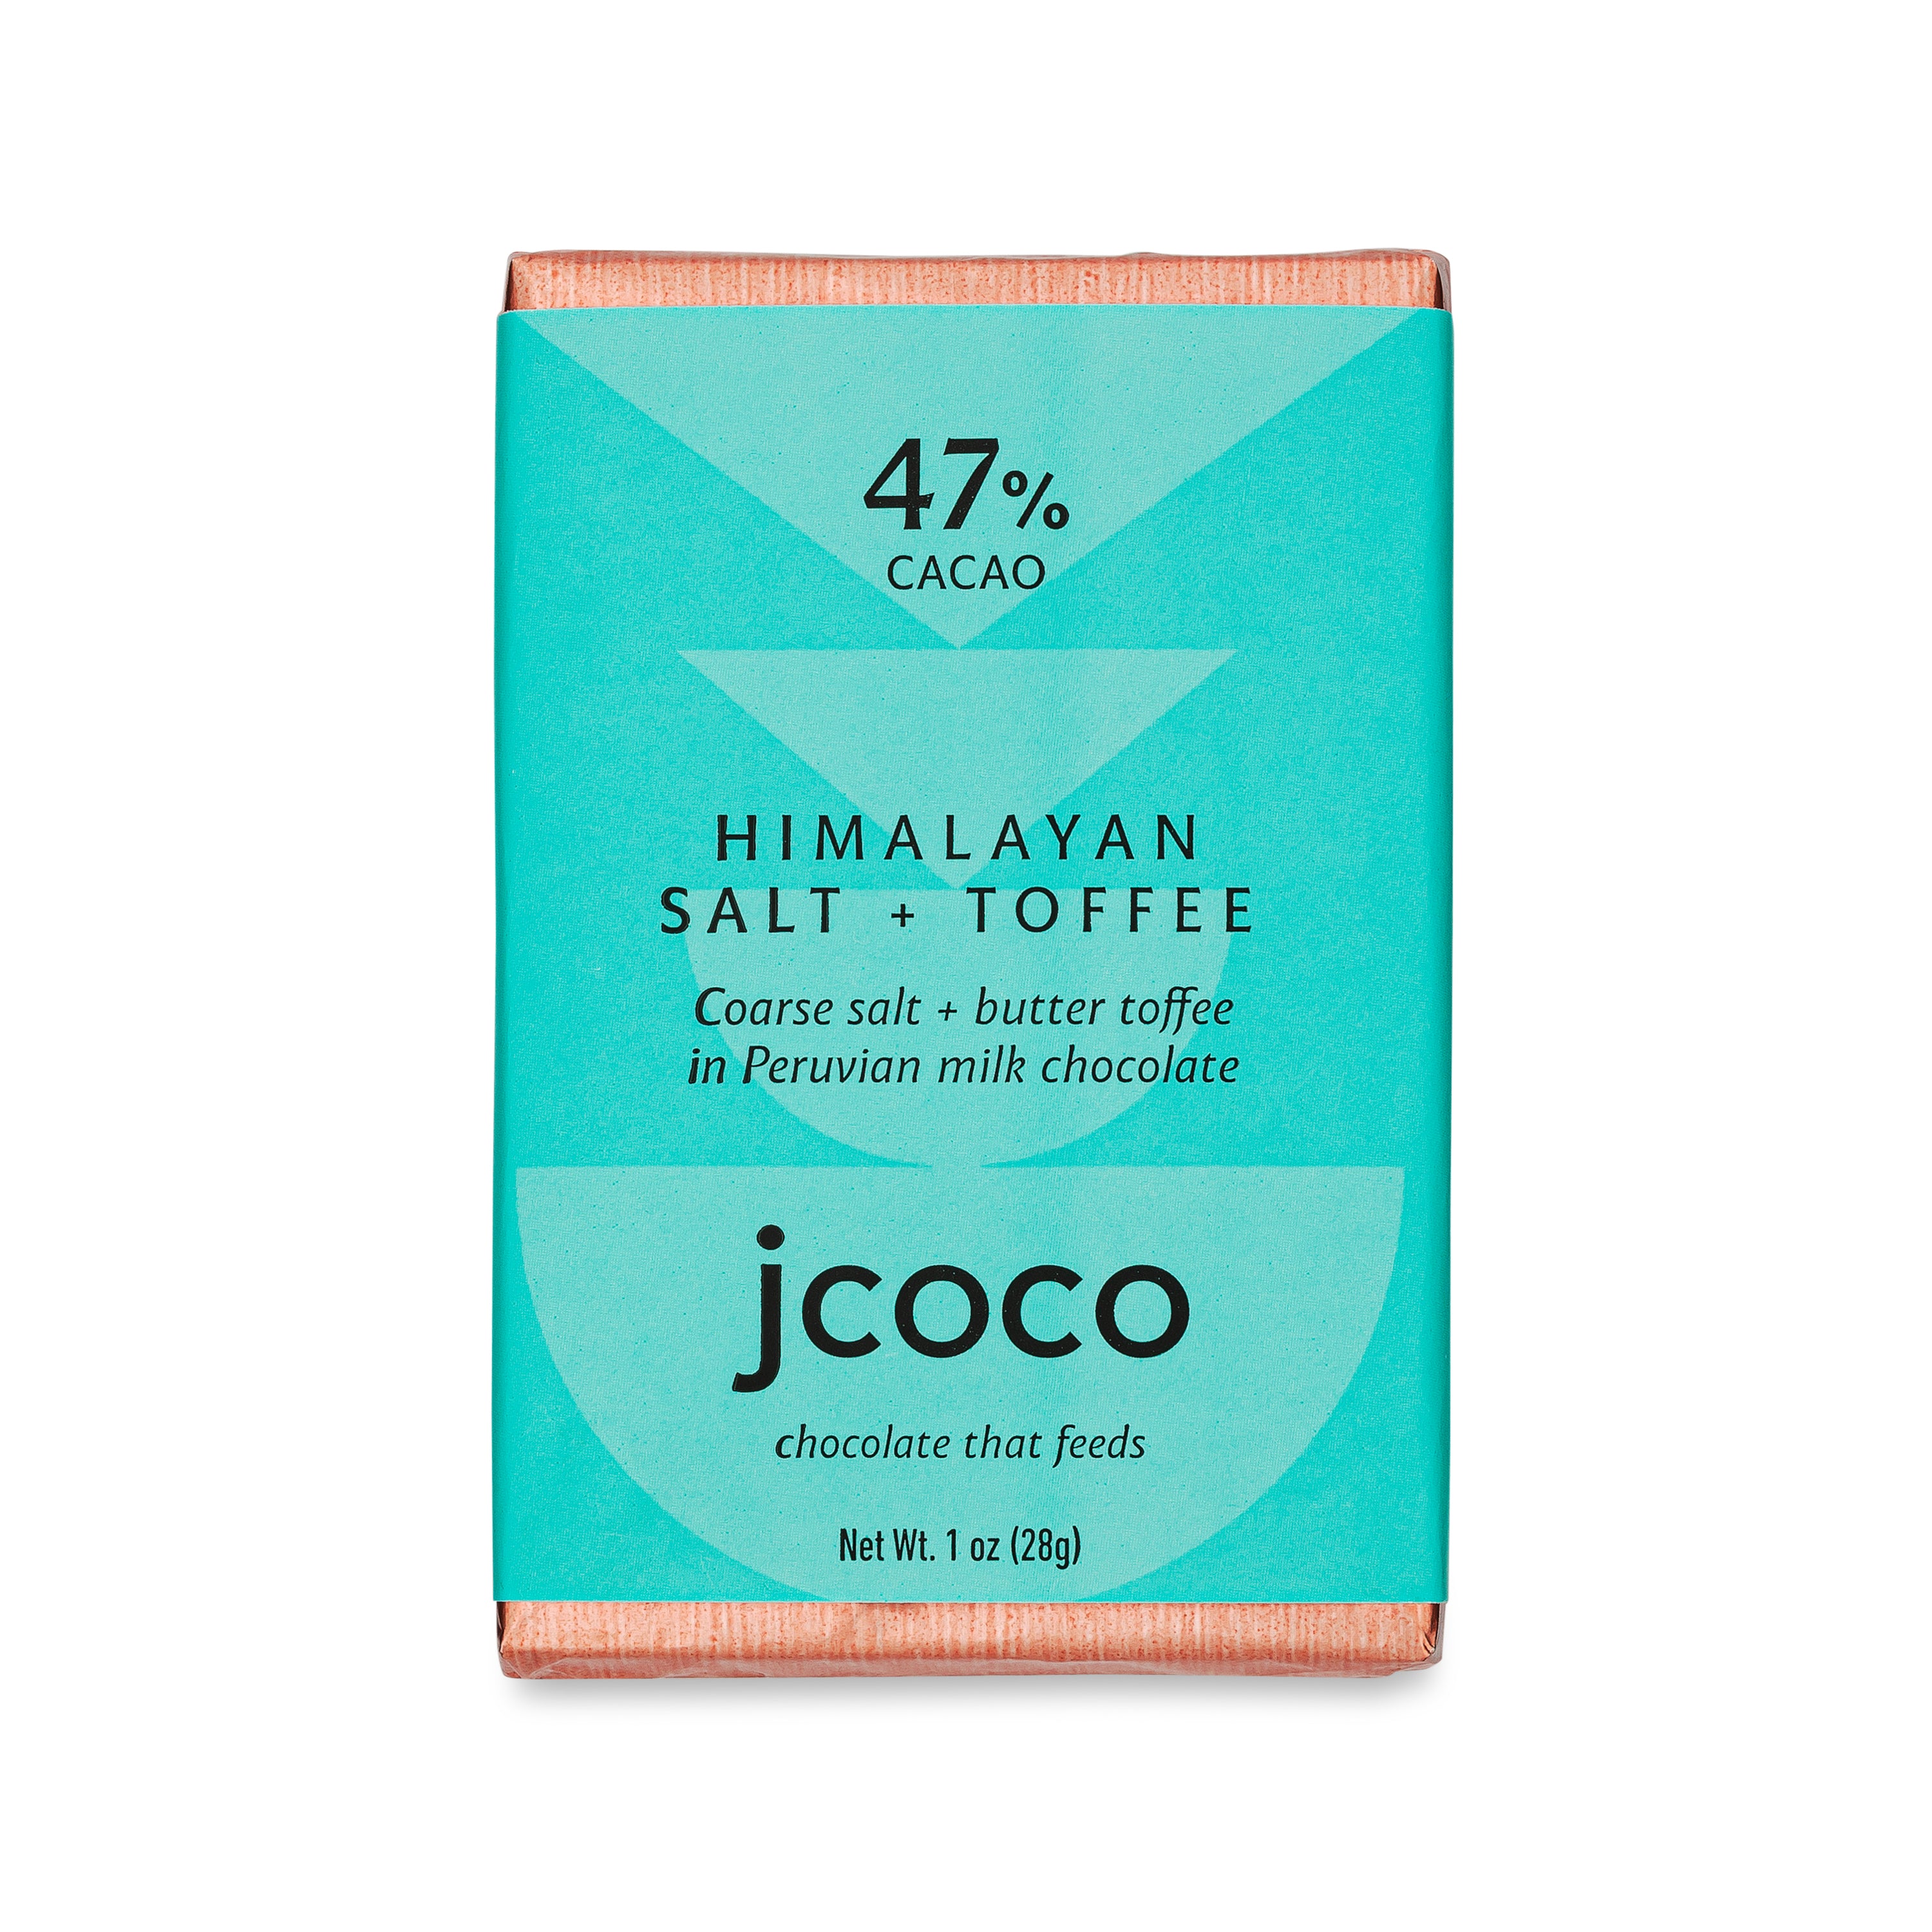 jcoco 47% cacao himalayan salt + toffee chocolate bar 1oz